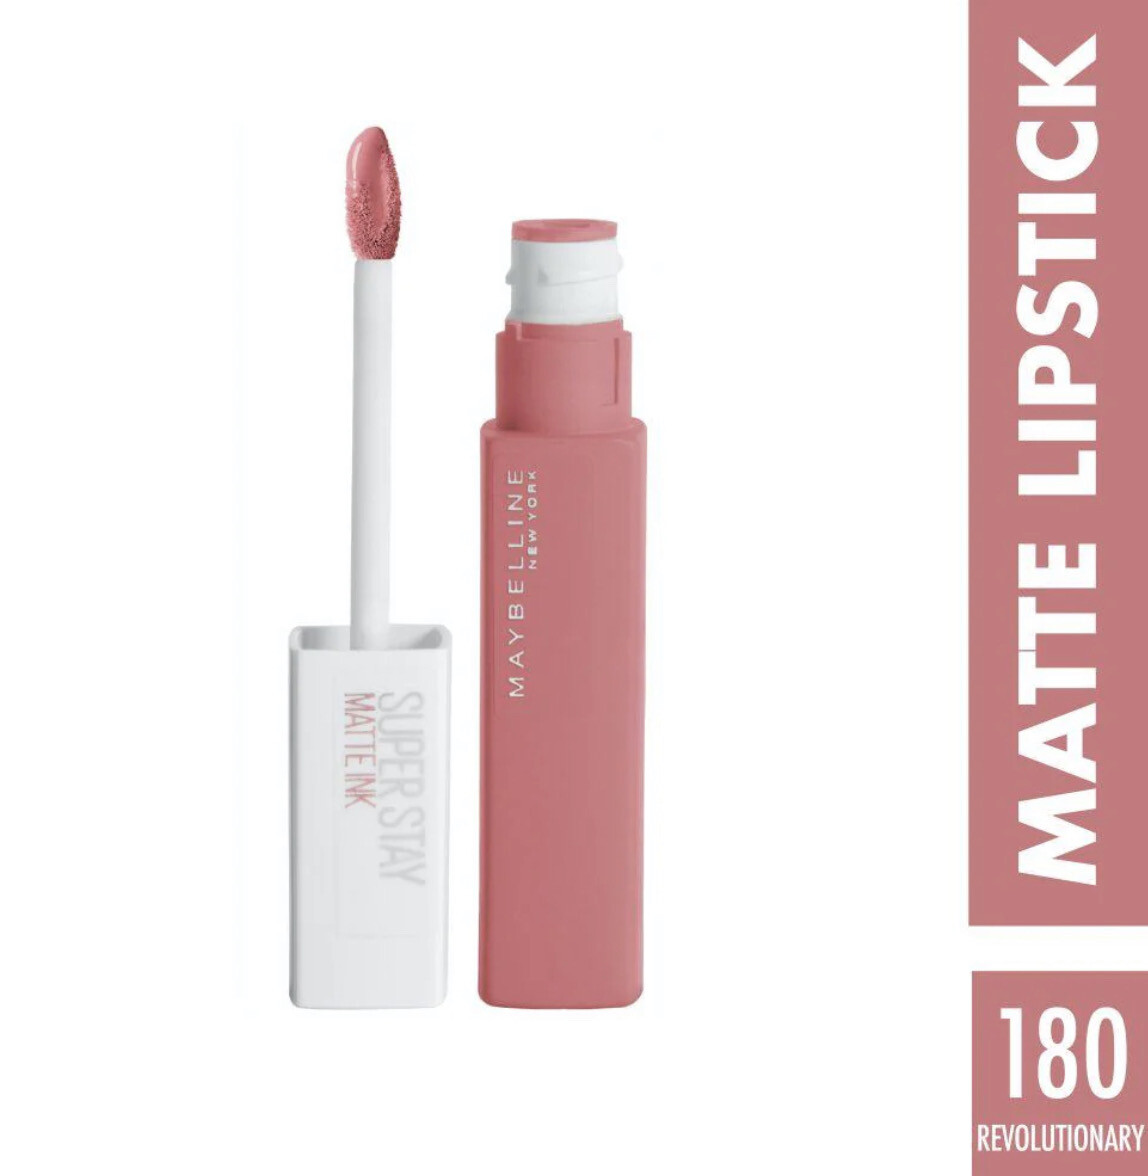 Maybelline - Superstay Matte Ink Pinks Liquid Lipstick | 180 Revolutionary